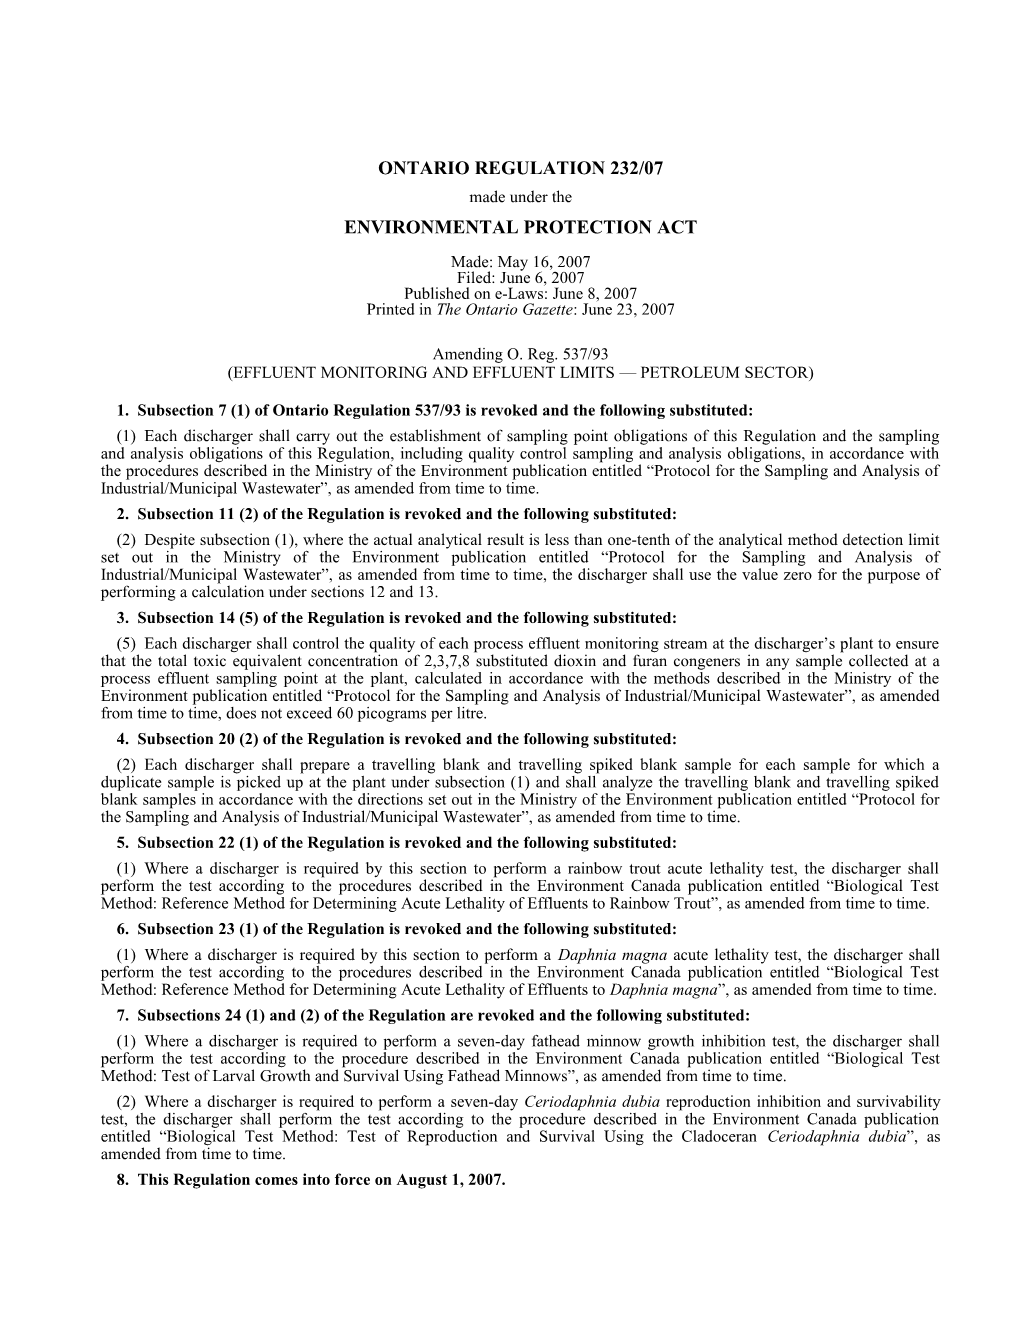 ENVIRONMENTAL PROTECTION ACT - O. Reg. 232/07